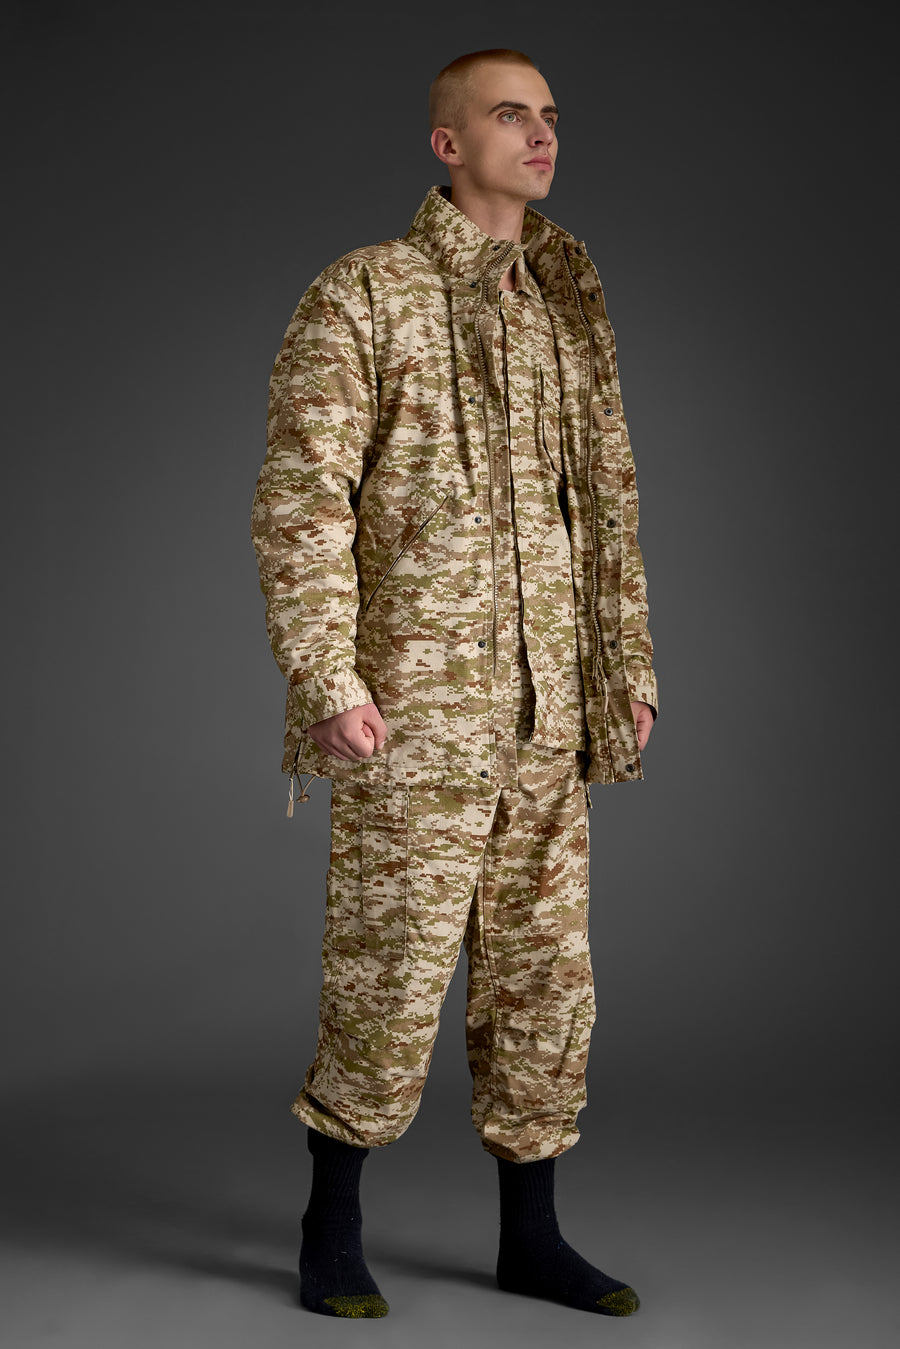 Desert Camouflage Suit